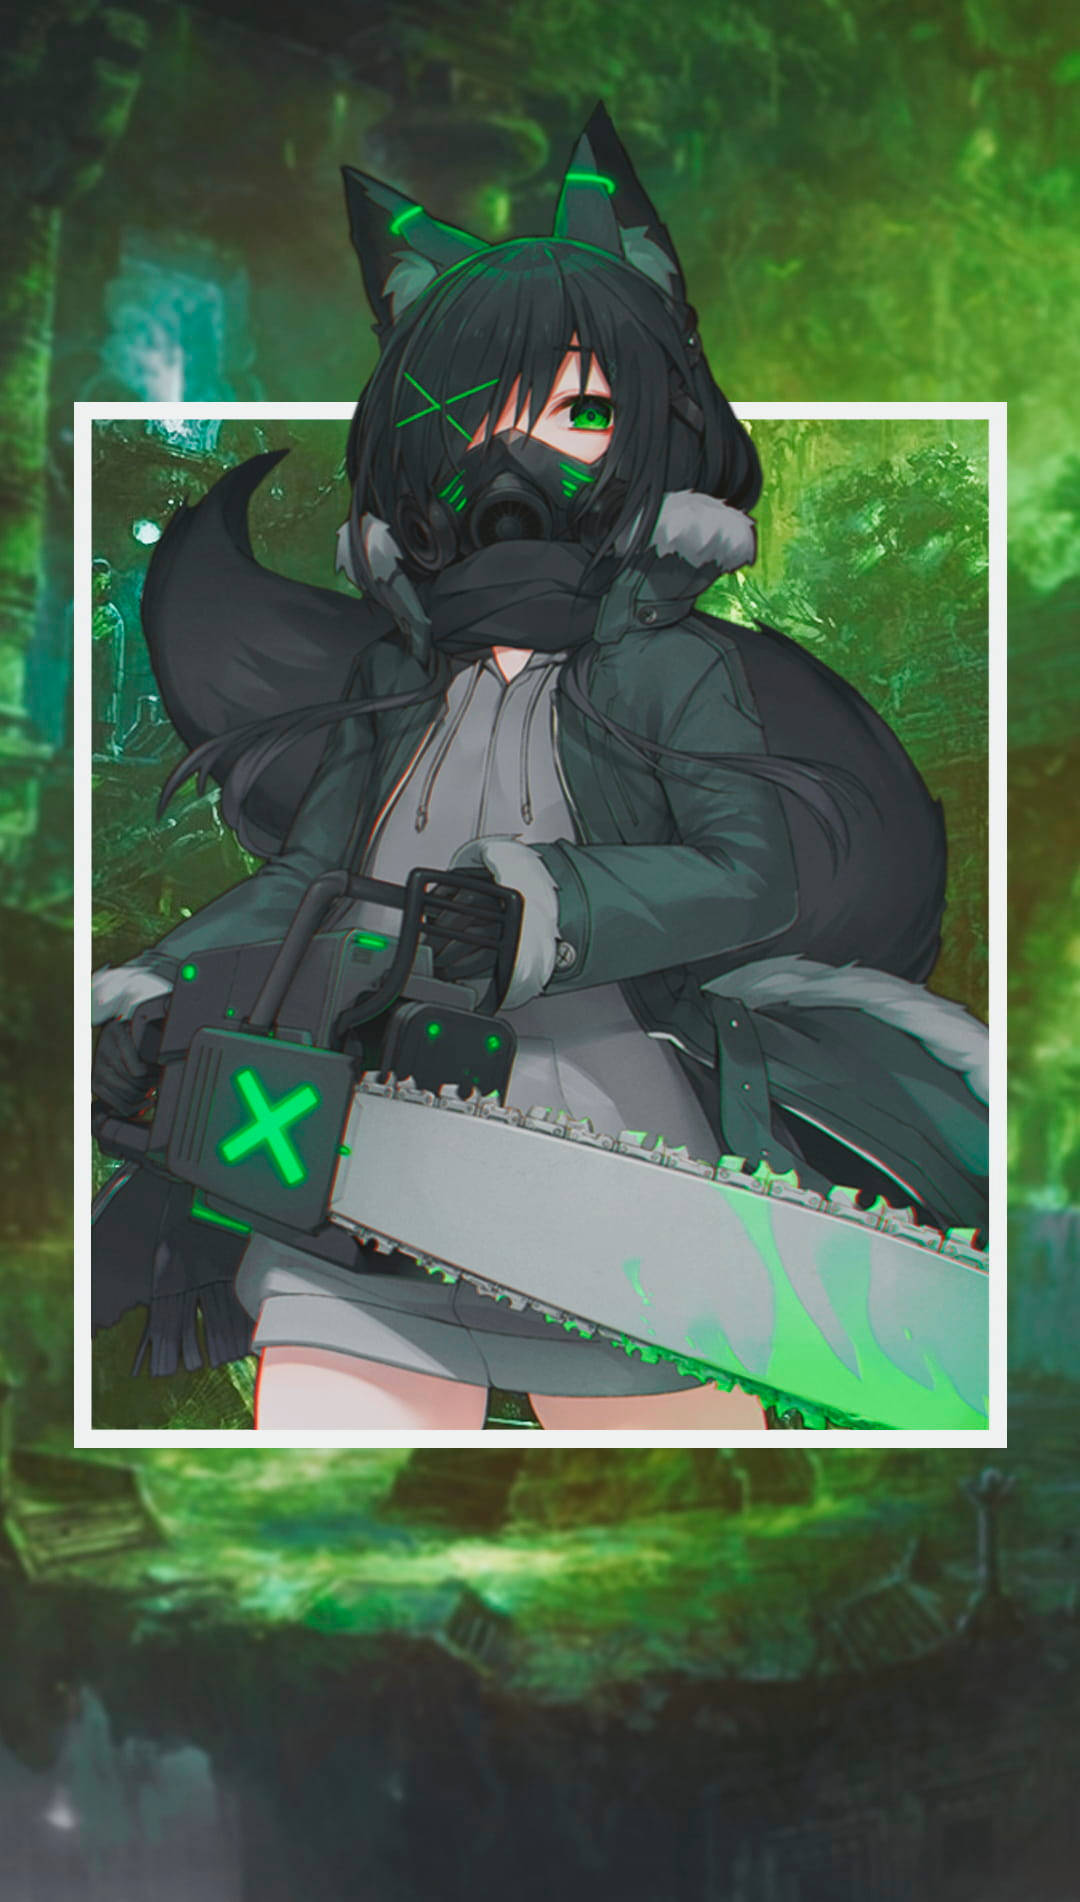 Toxic Wolf Aesthetic Anime Girl Iphone Wallpaper